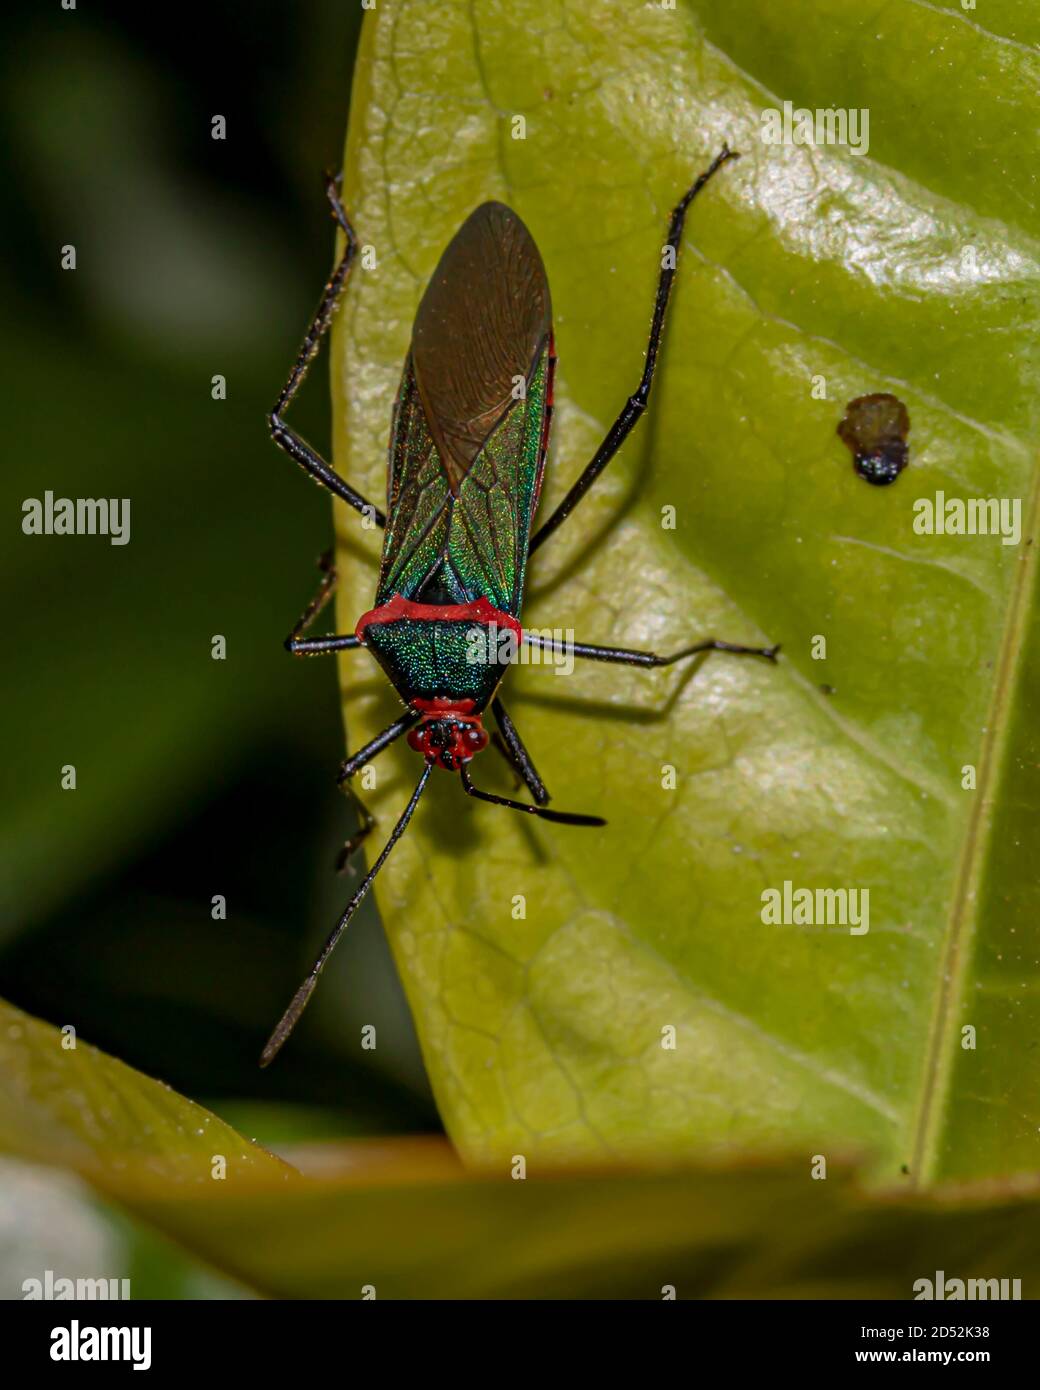 Sphictyrtus True Bug walking on a Green Leaf (Percevejo Sphictyrtus / Sphictyrtus sp. - Coreidae Family) Stock Photo